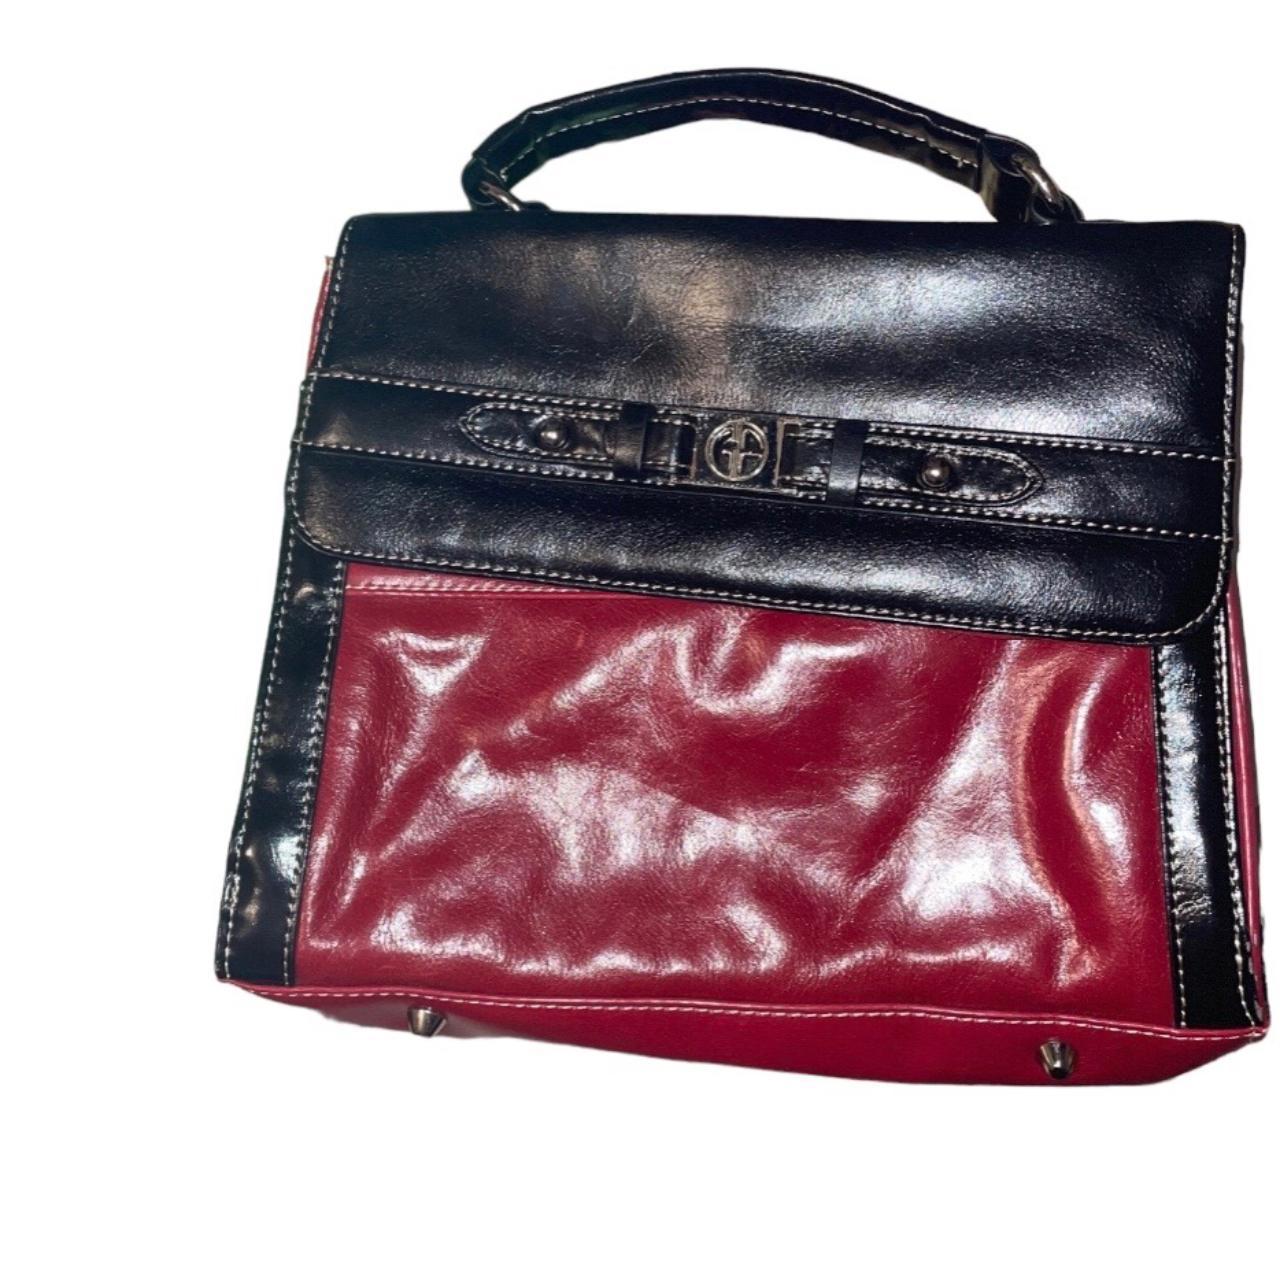 giani bernini red leather purse